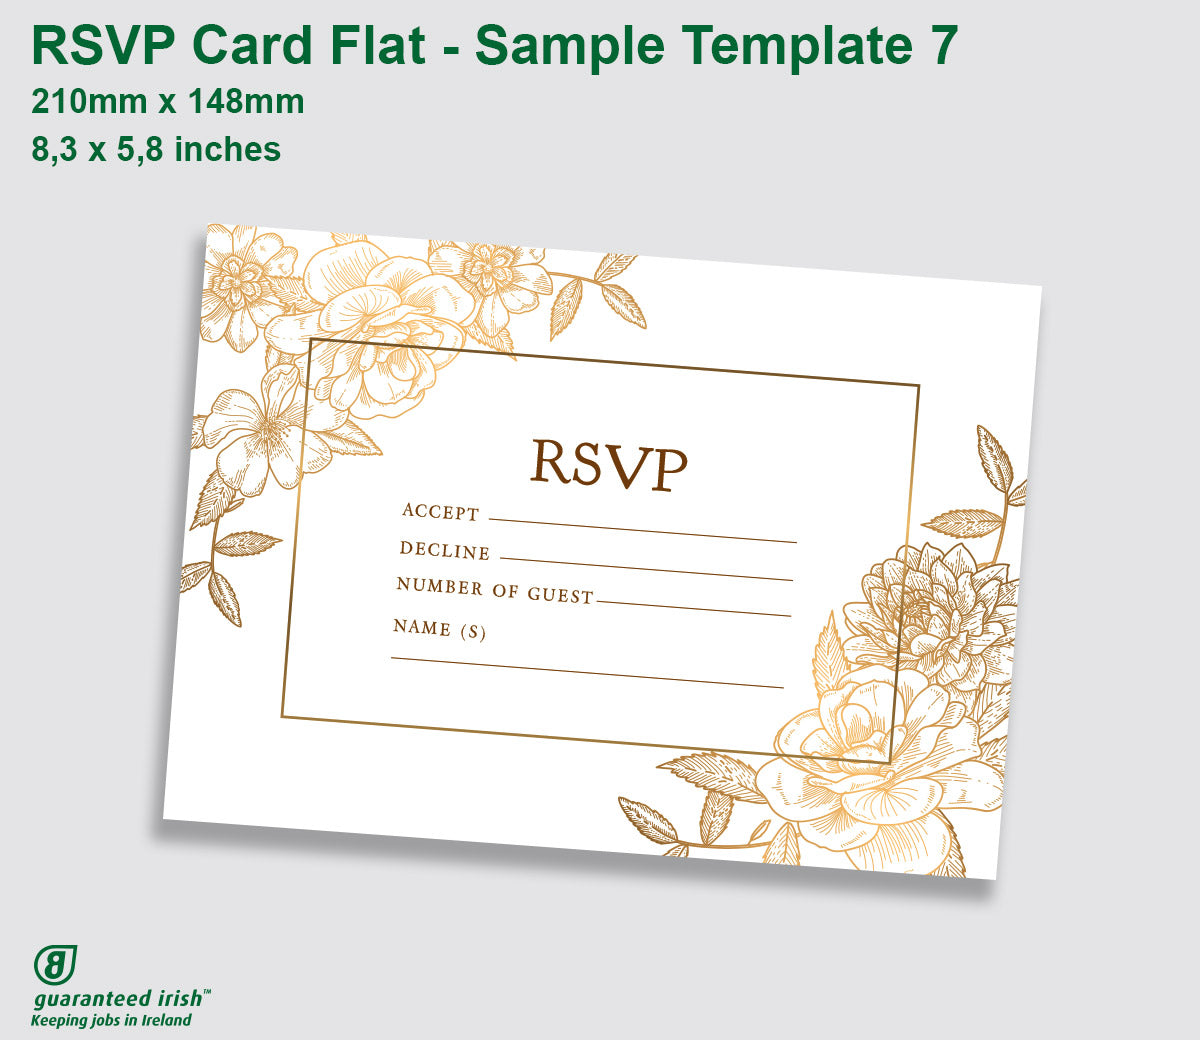 RSVP Card - Sample 7